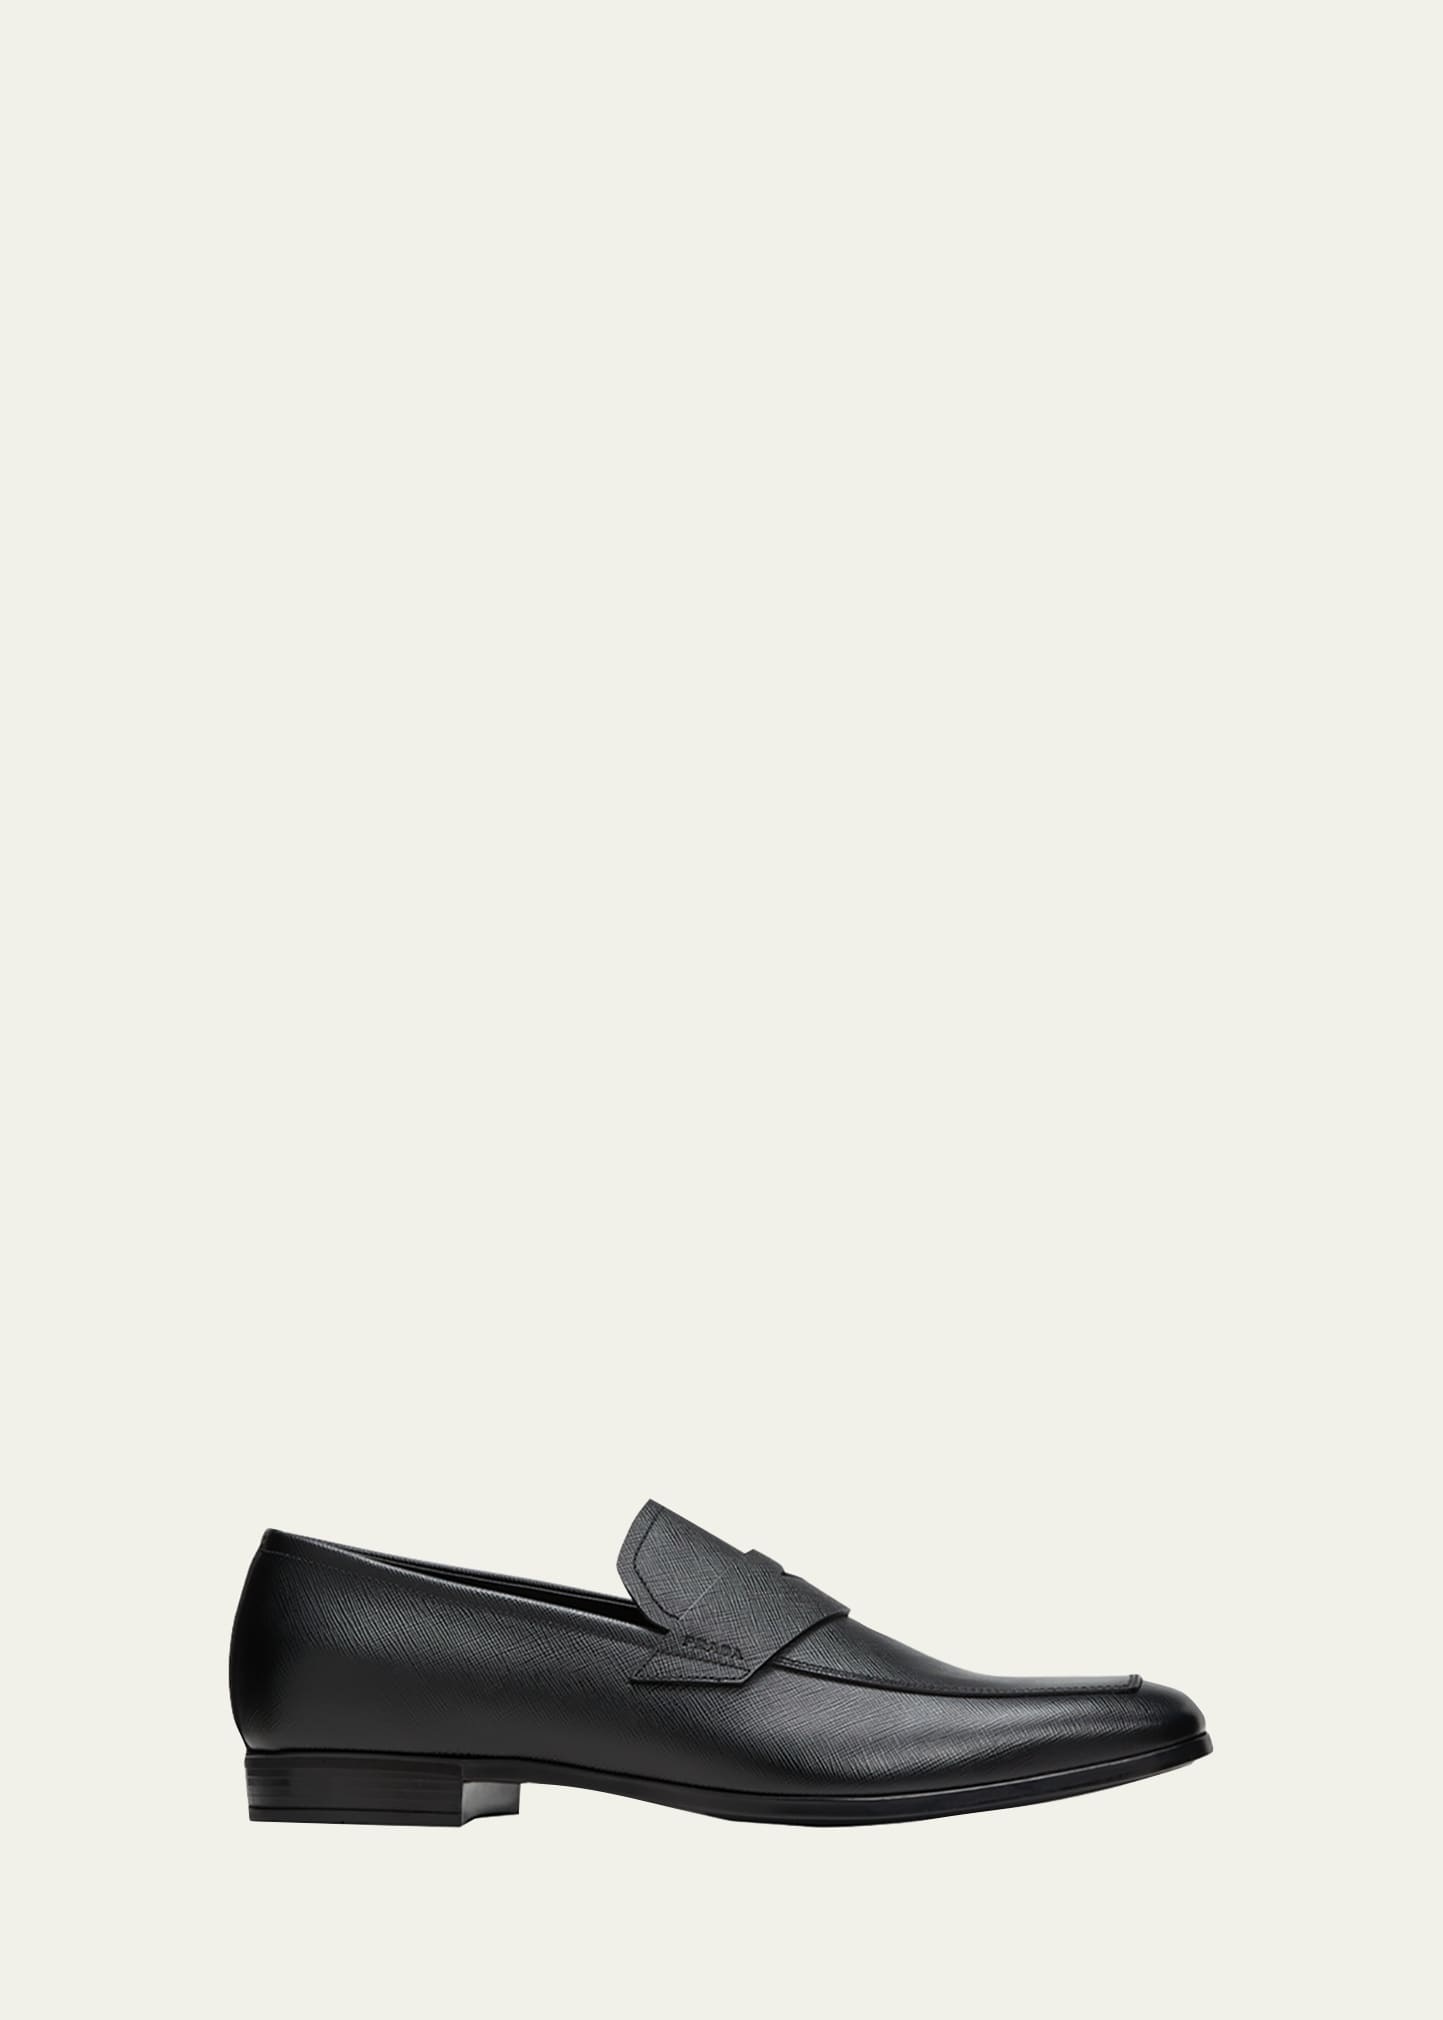 Prada Saffiano Leather Penny Loafer In Black